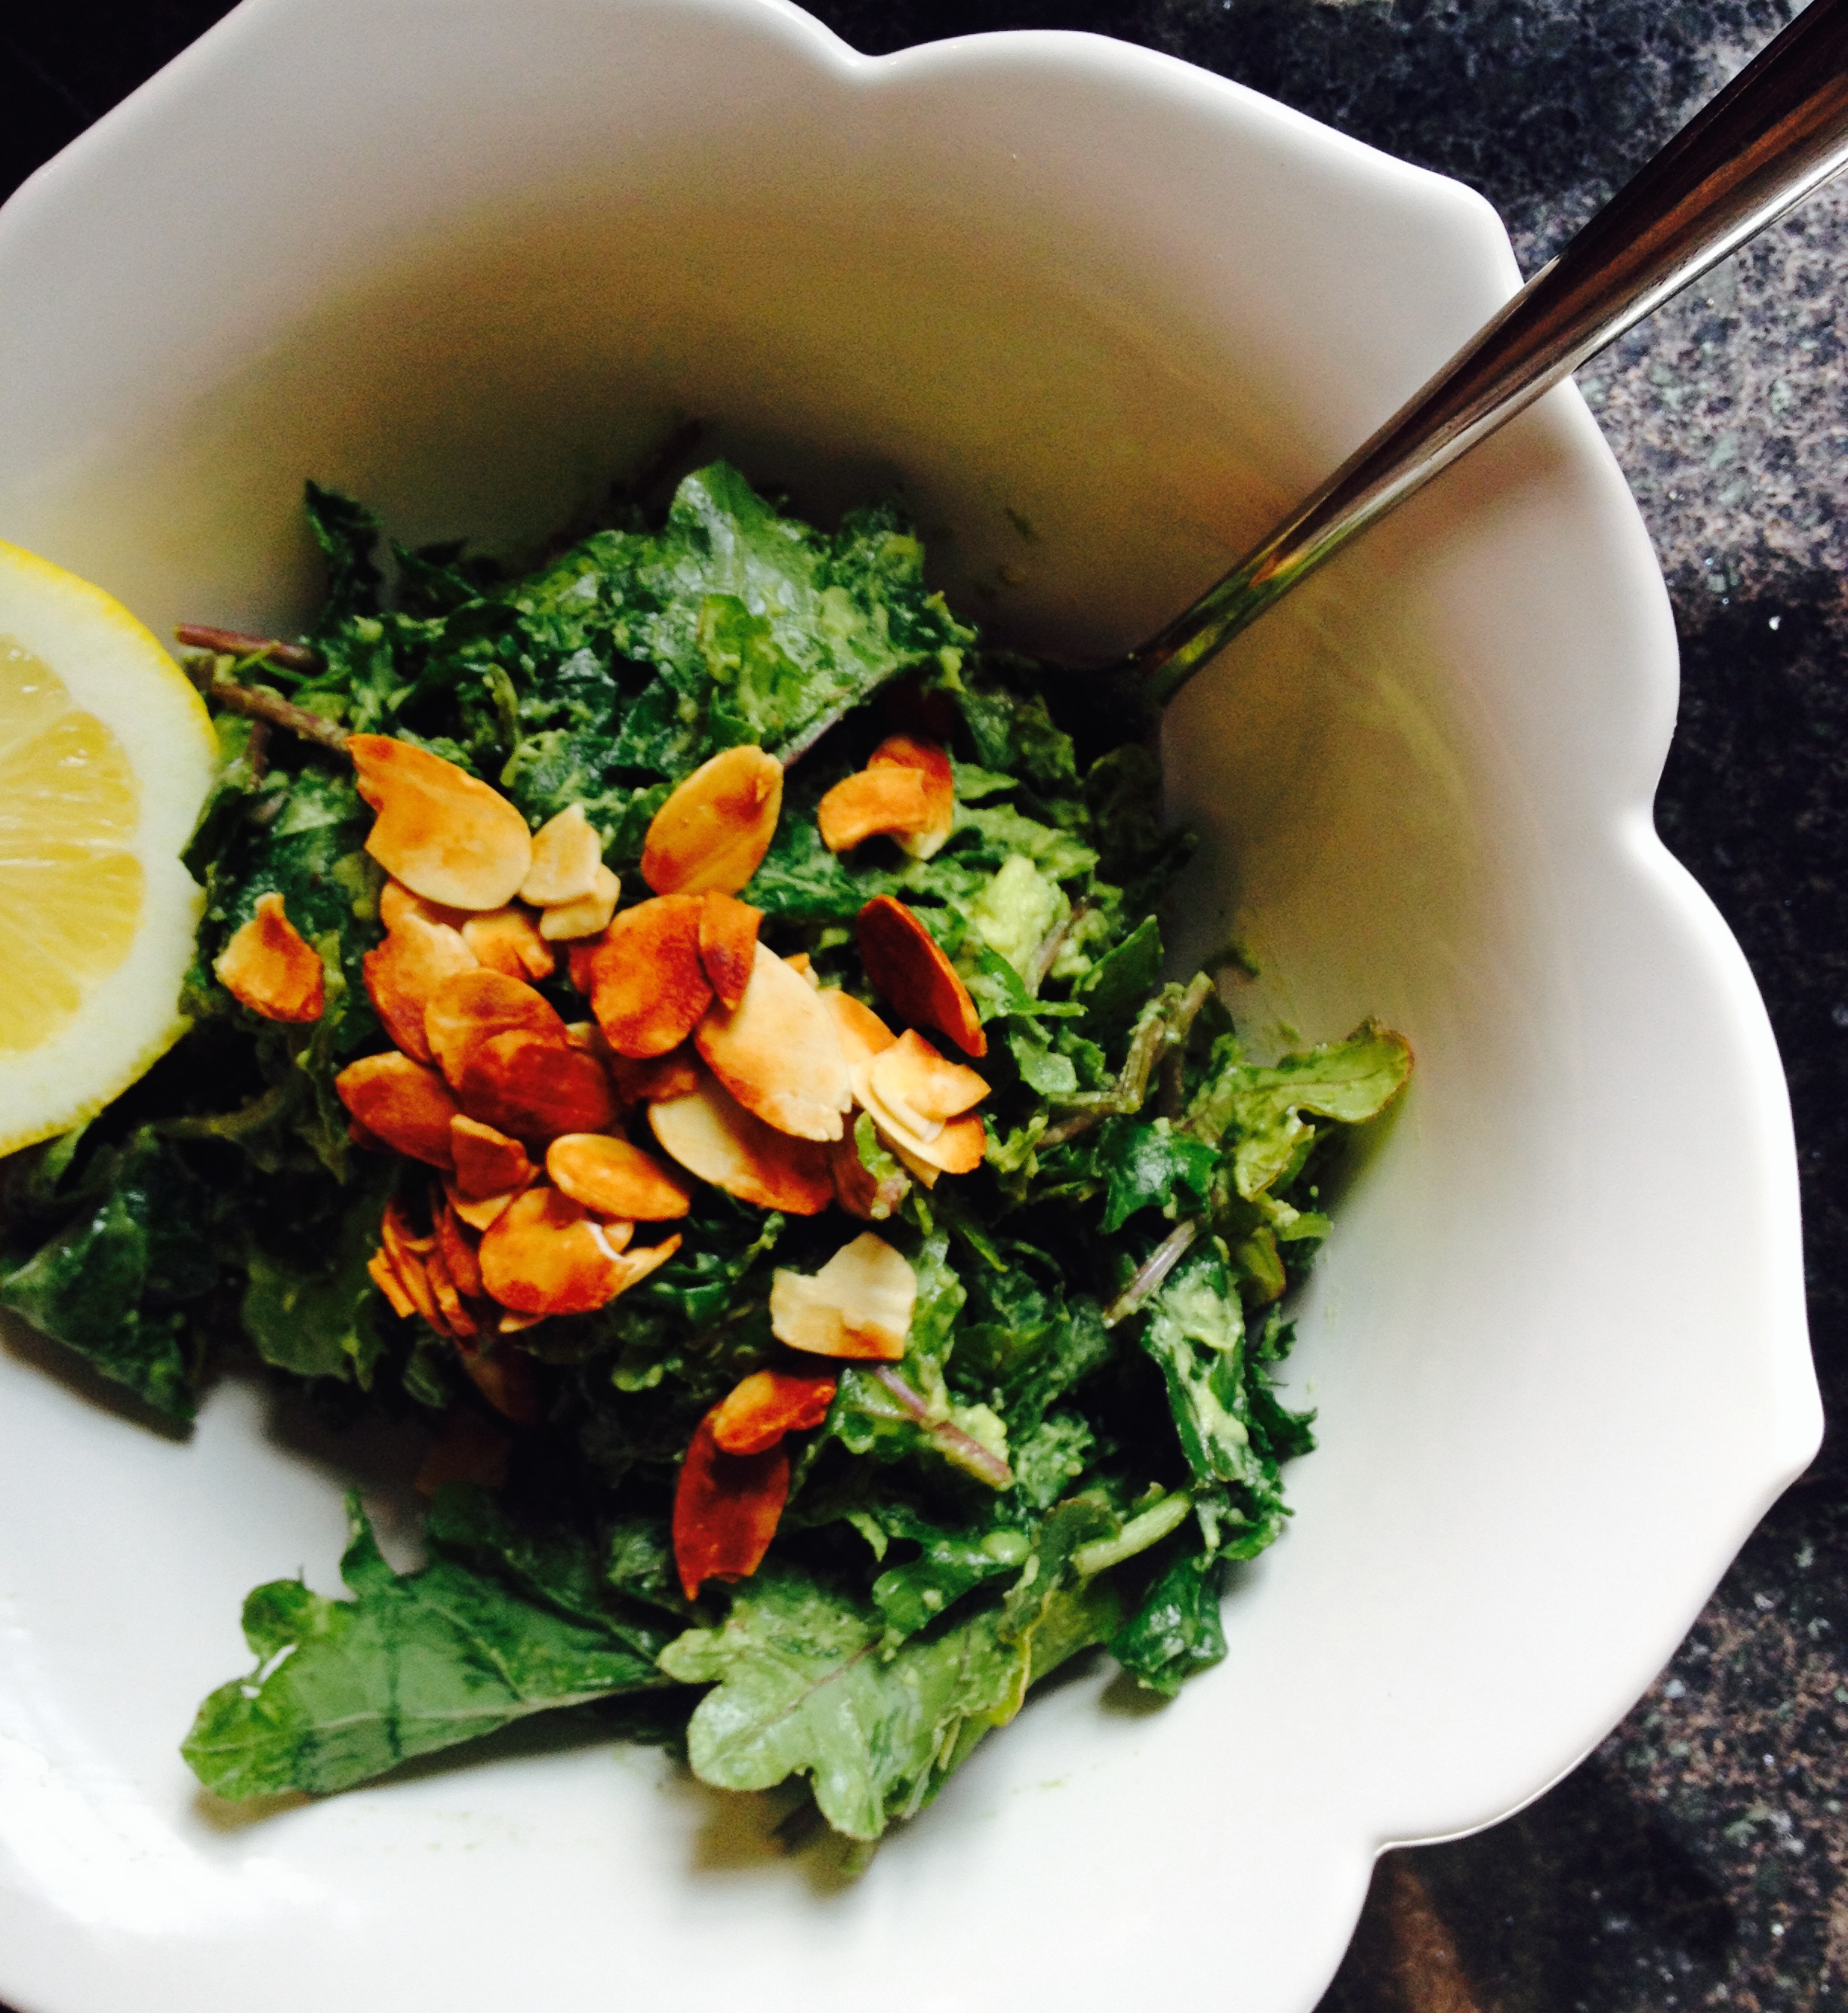 addictive avocado and lemon kale salad :: by radish*rose